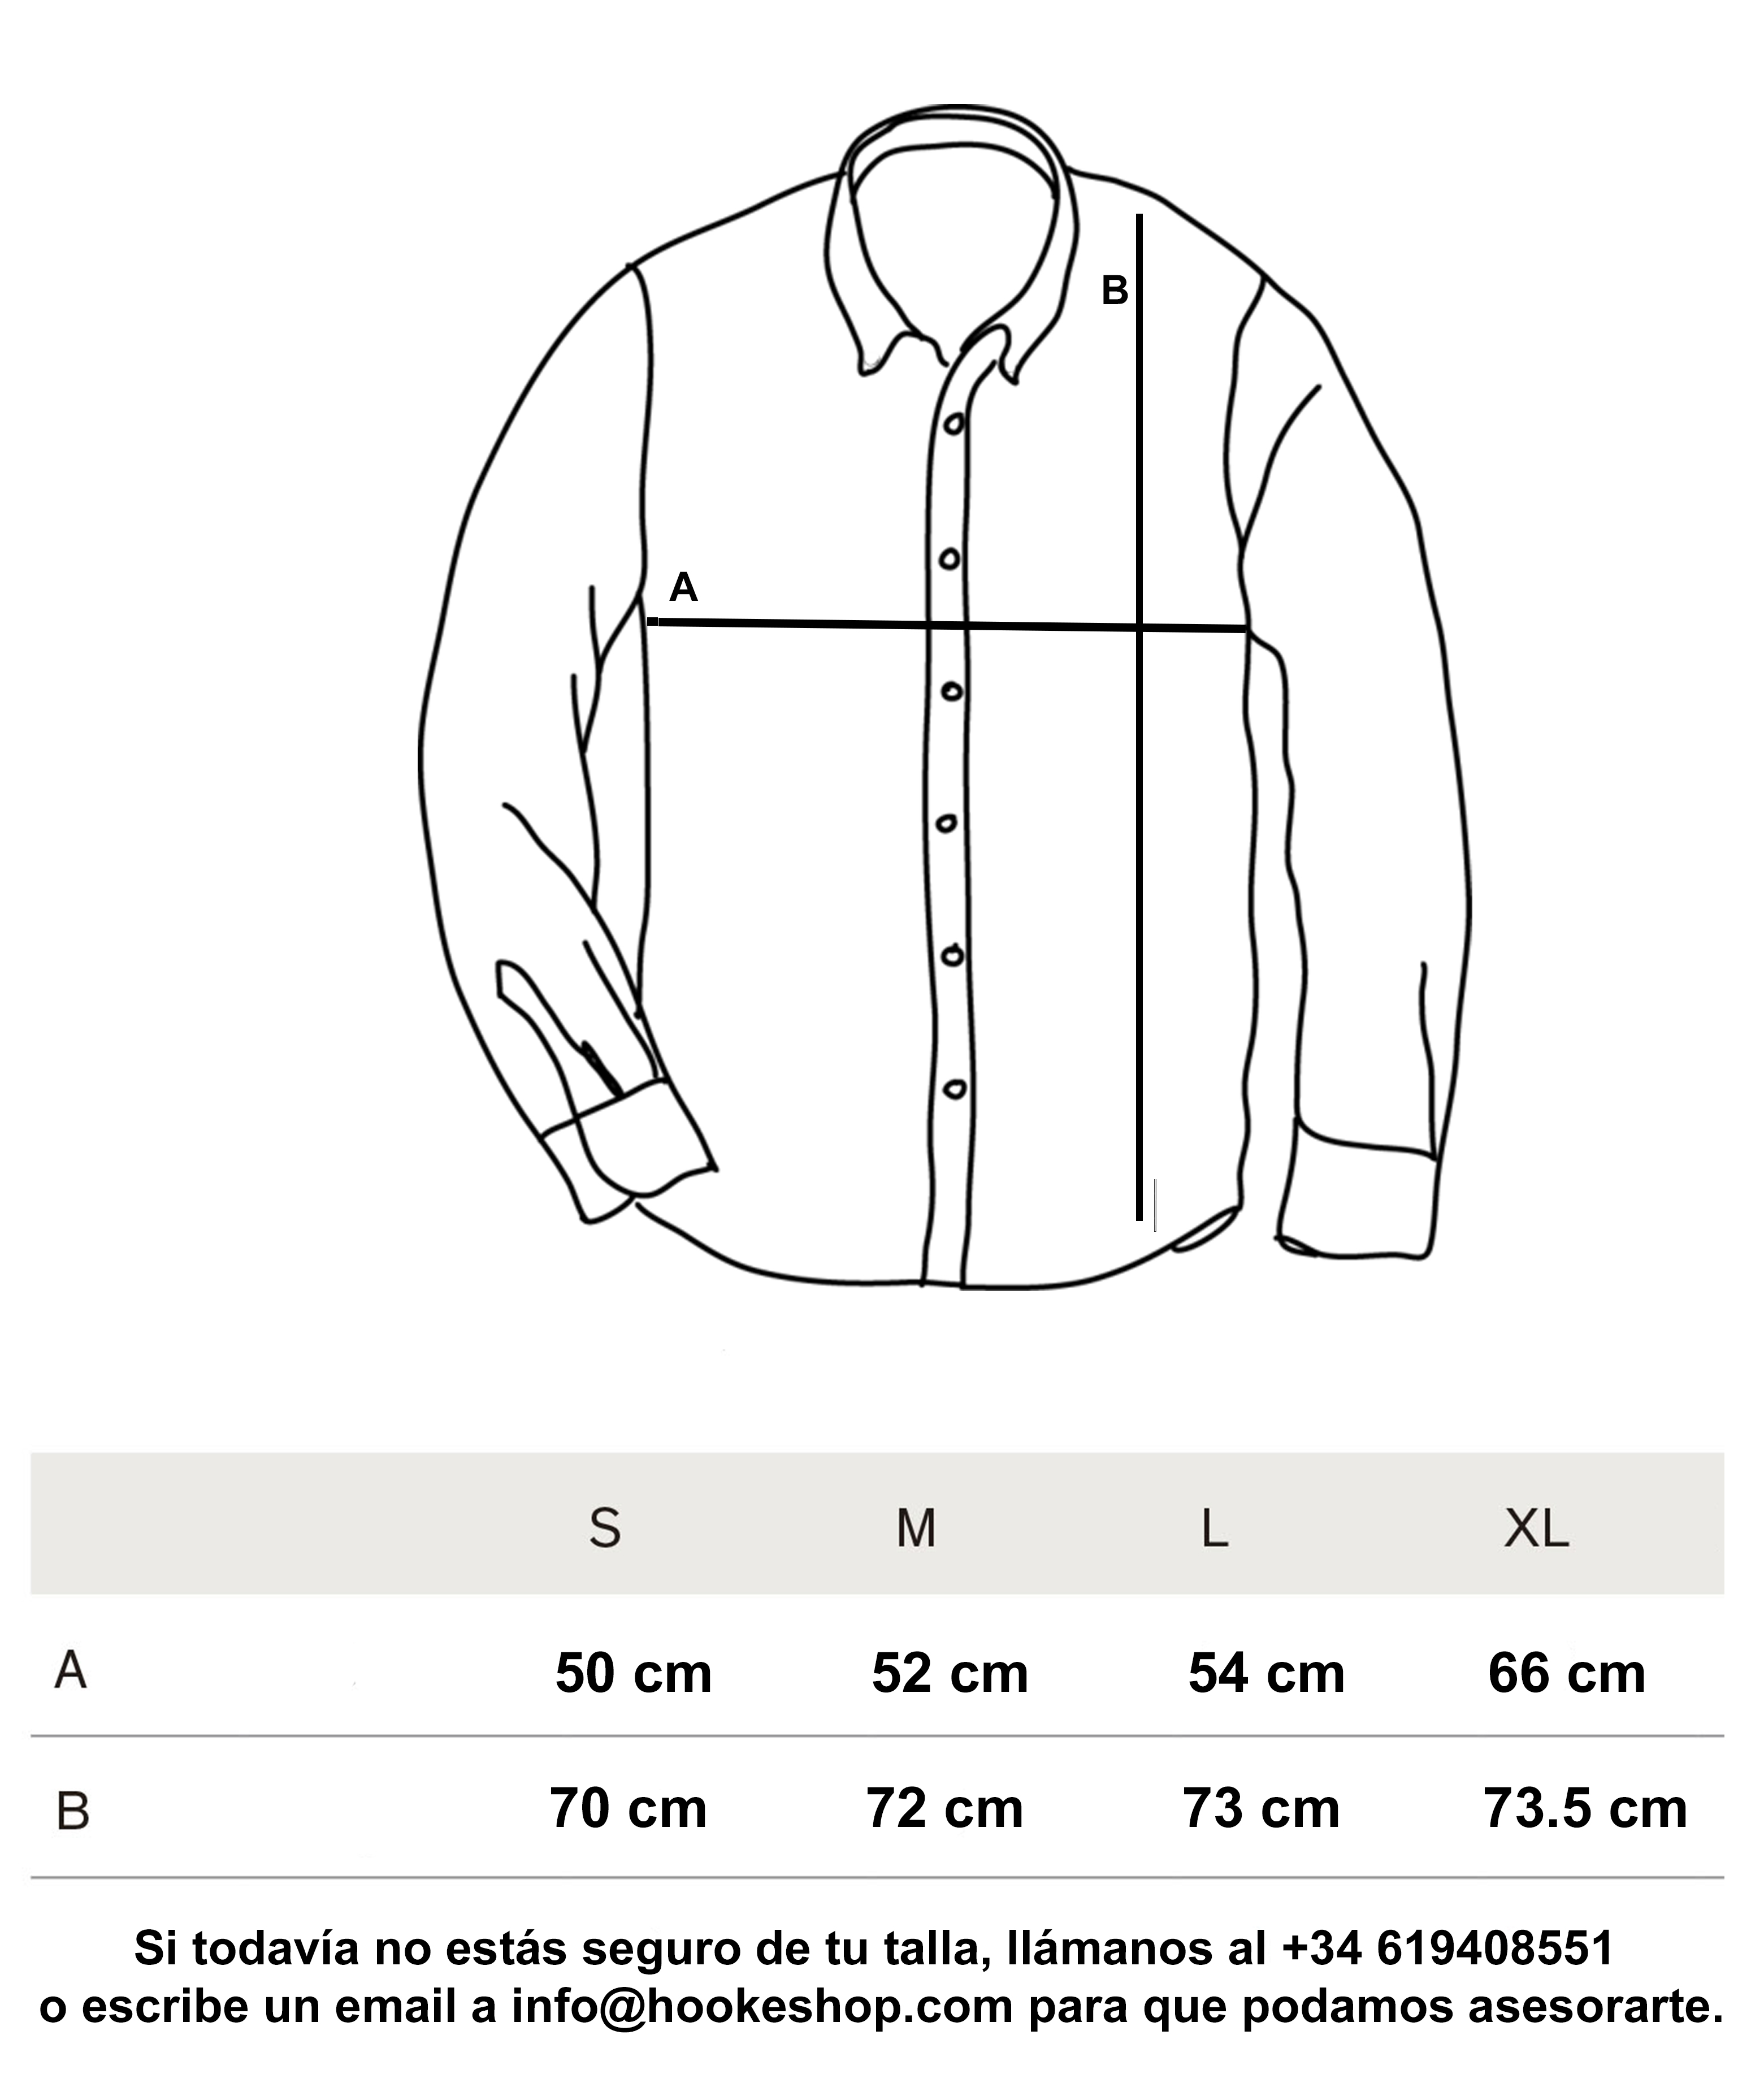 Shirt Size Guide 2018